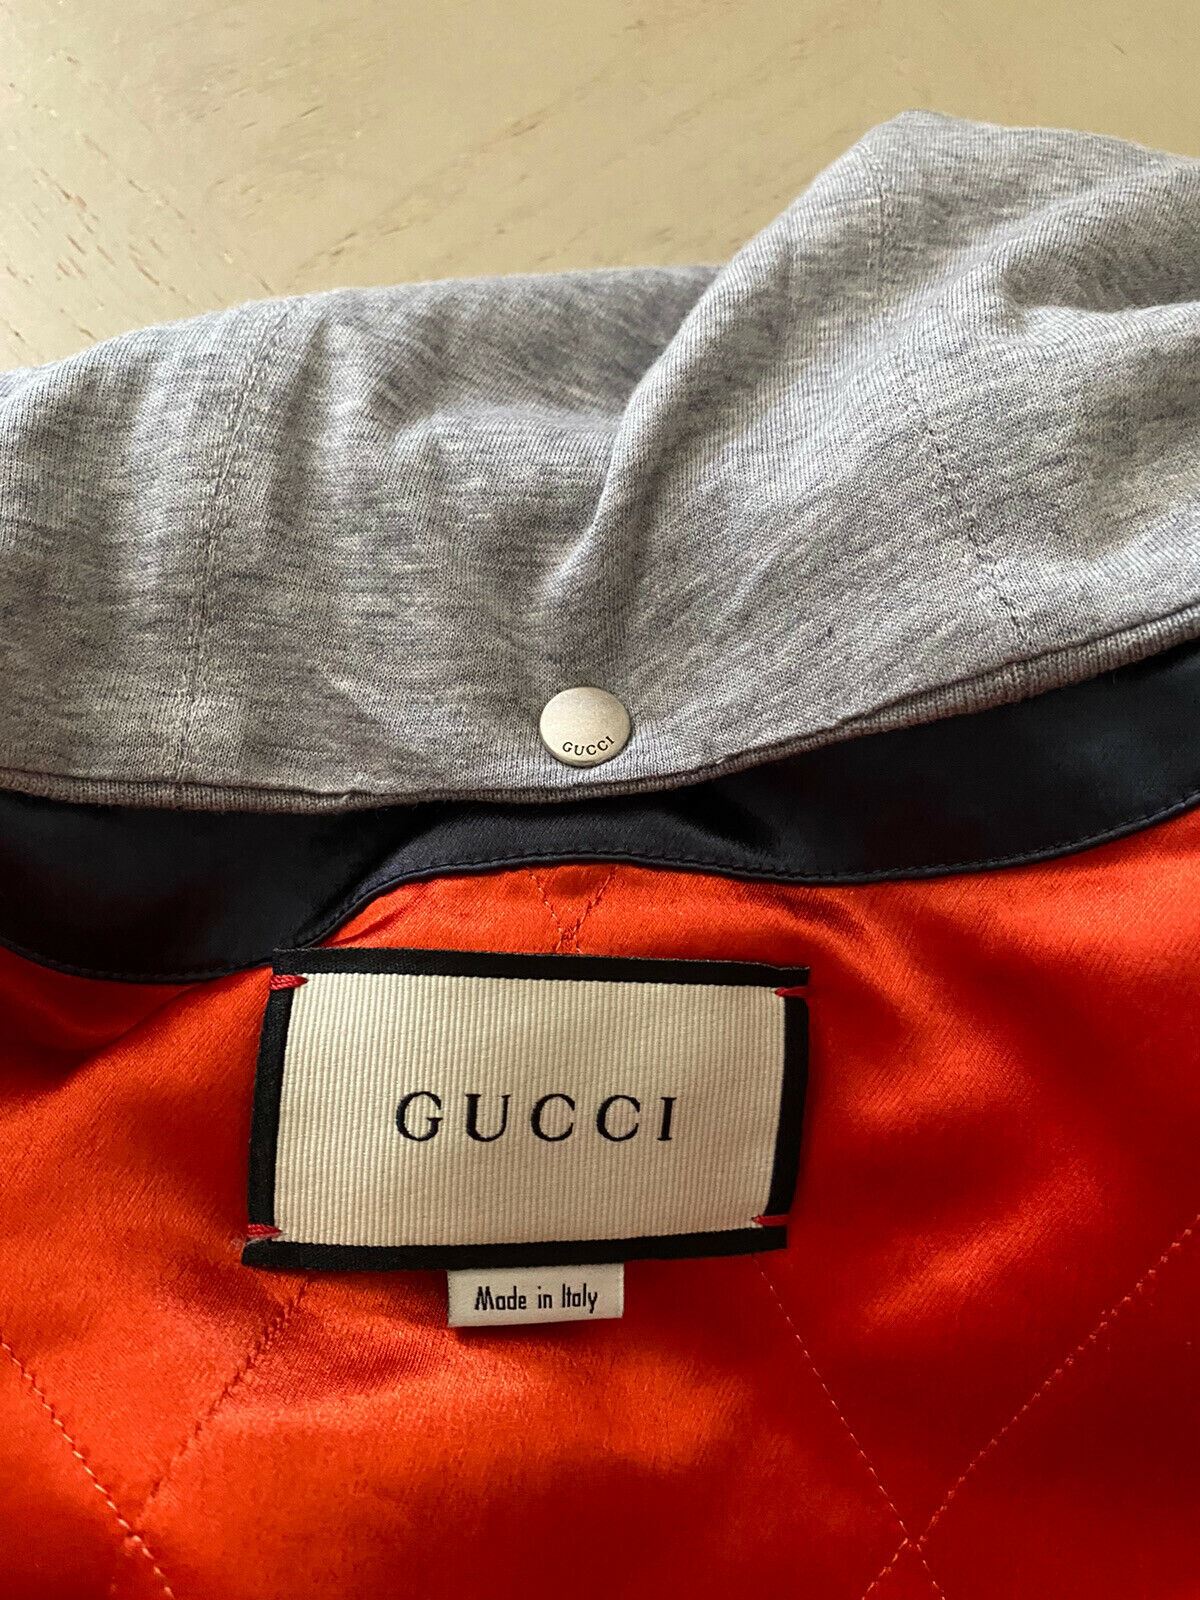 NWT $2850 Gucci Jacket Shirt Navy/Gray Size XL Italy